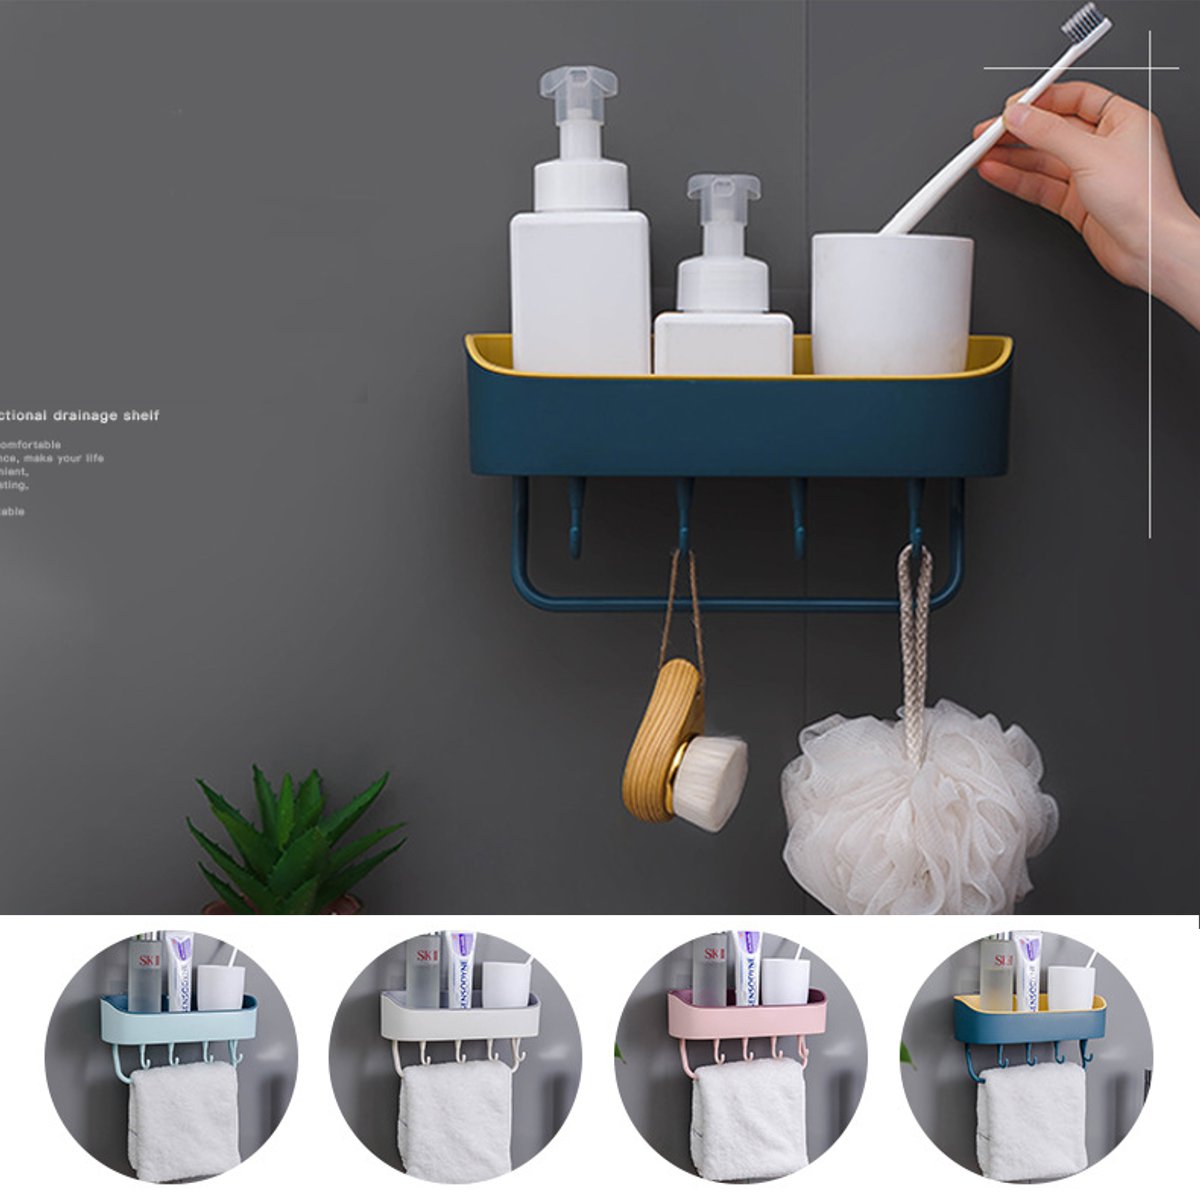 Self-adhesive-Wall-Hanging-Storage-Rack-Shelf-Hook-Home-Kitchen-Holder-Organizer-Towel-Holder-1552900-10